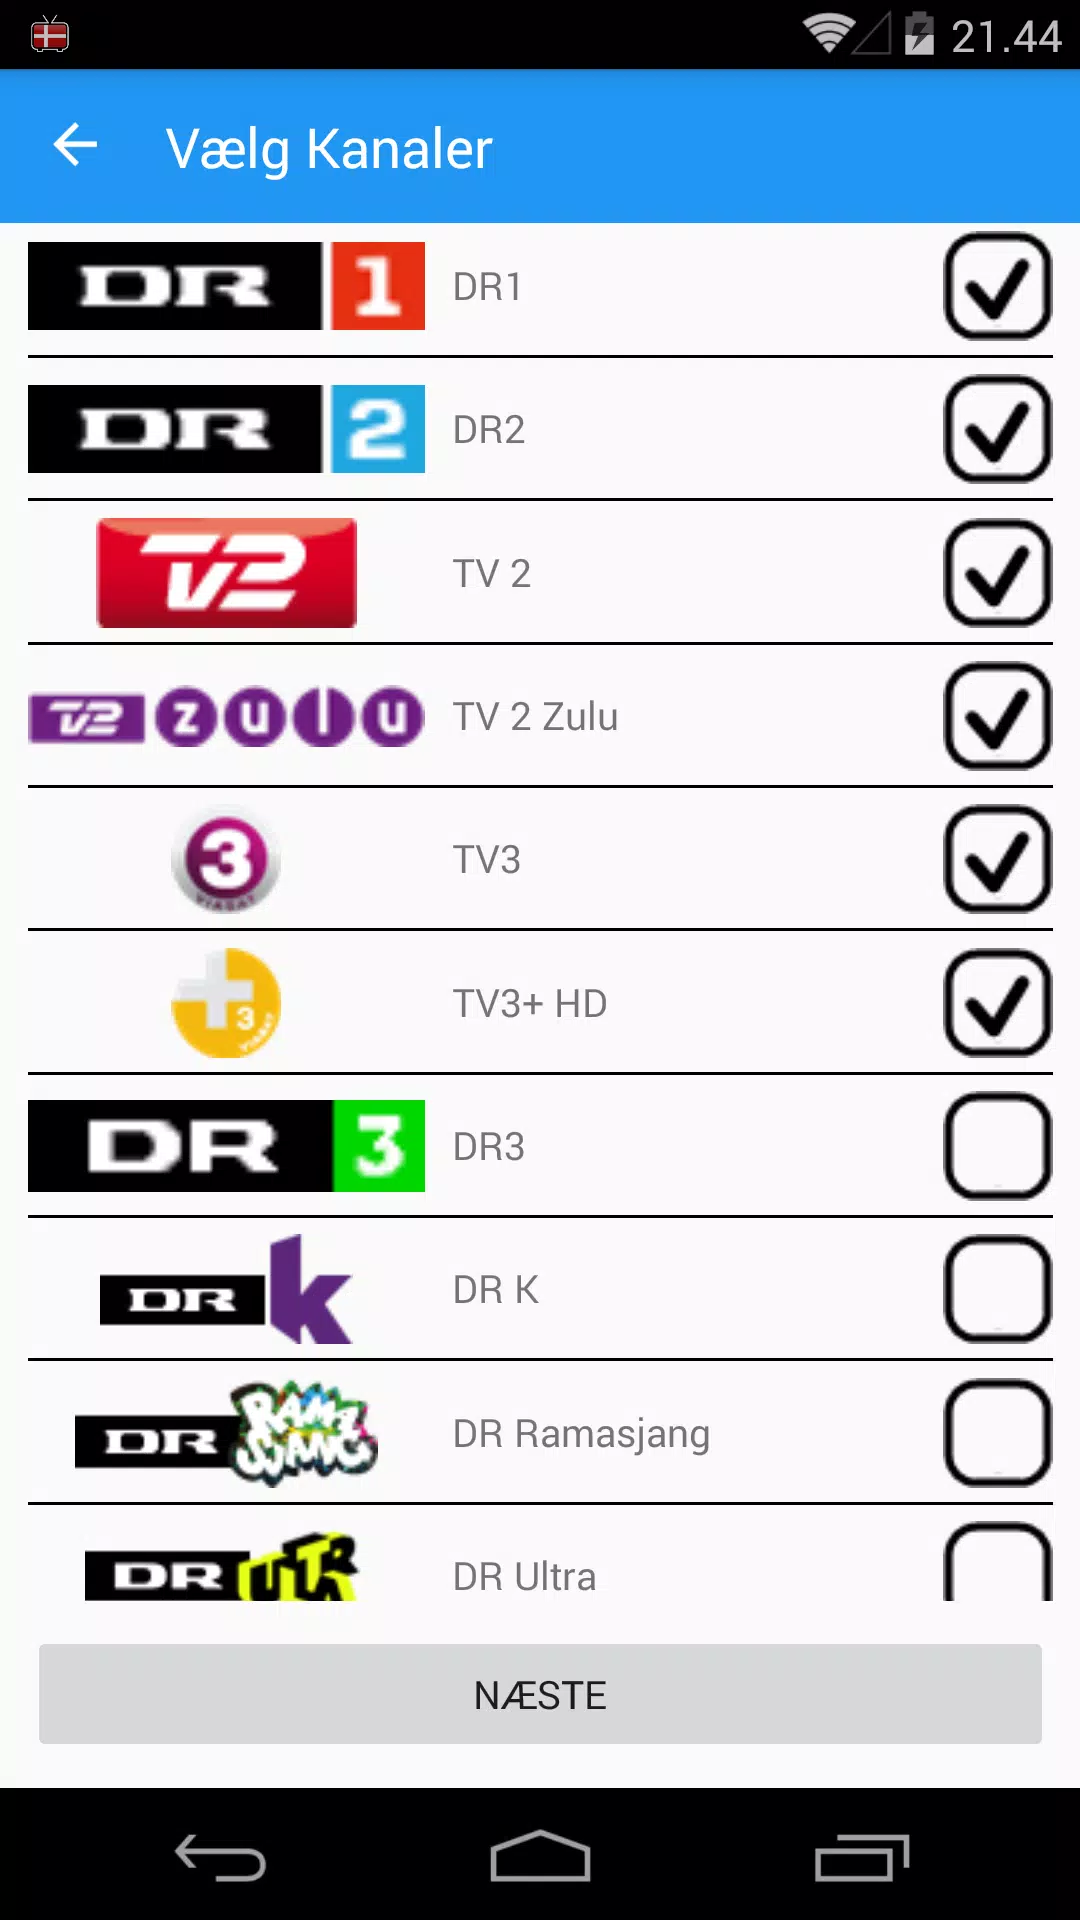 Dansk TV Guide APK for Android Download